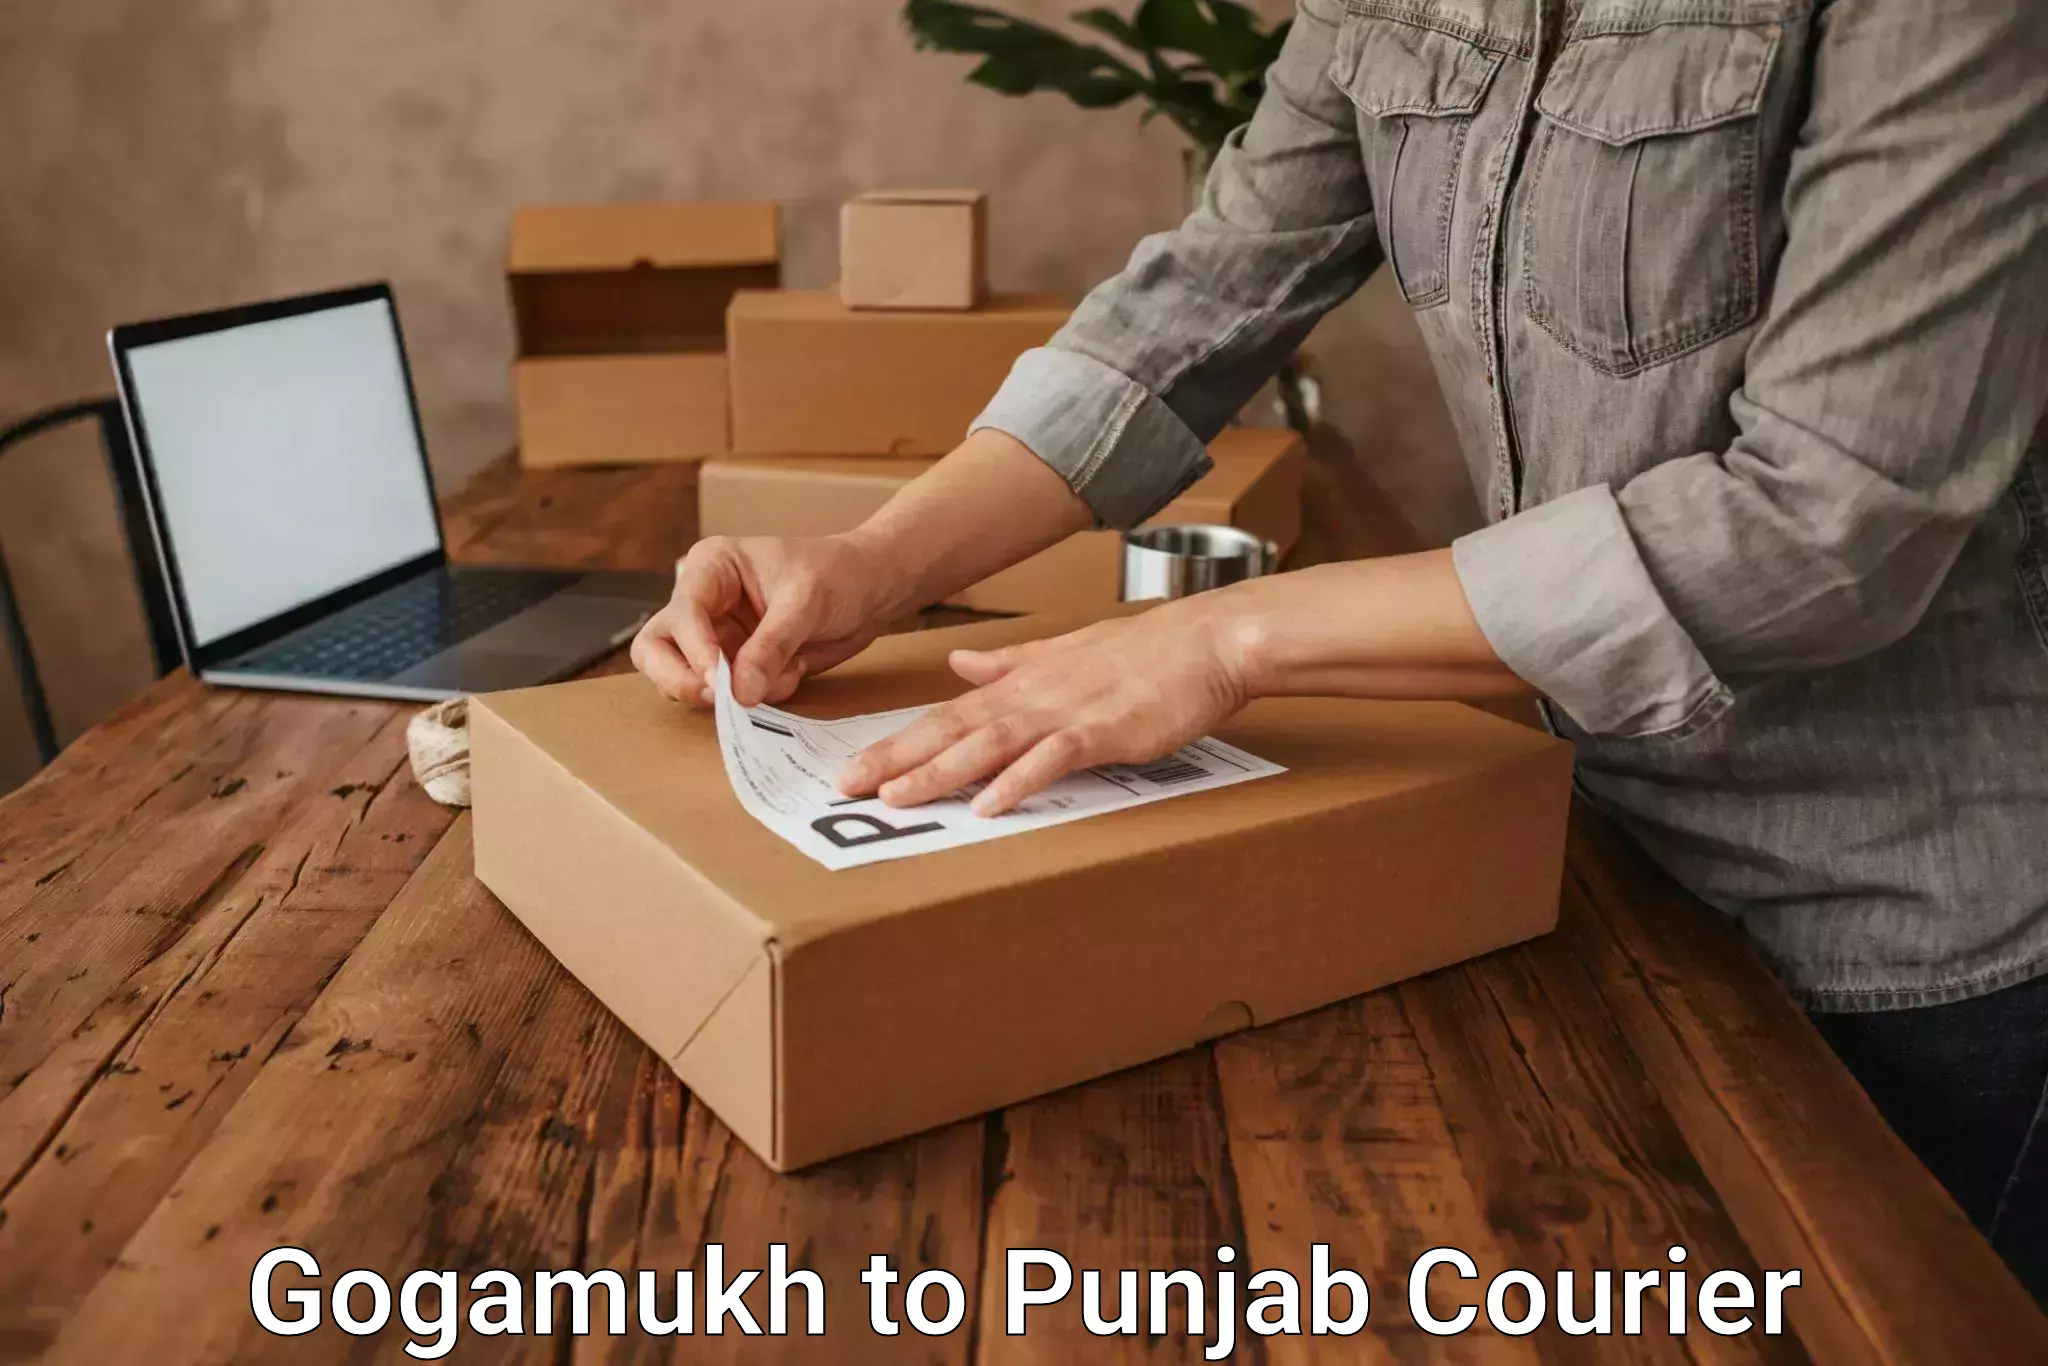 Next-day delivery options Gogamukh to Amritsar